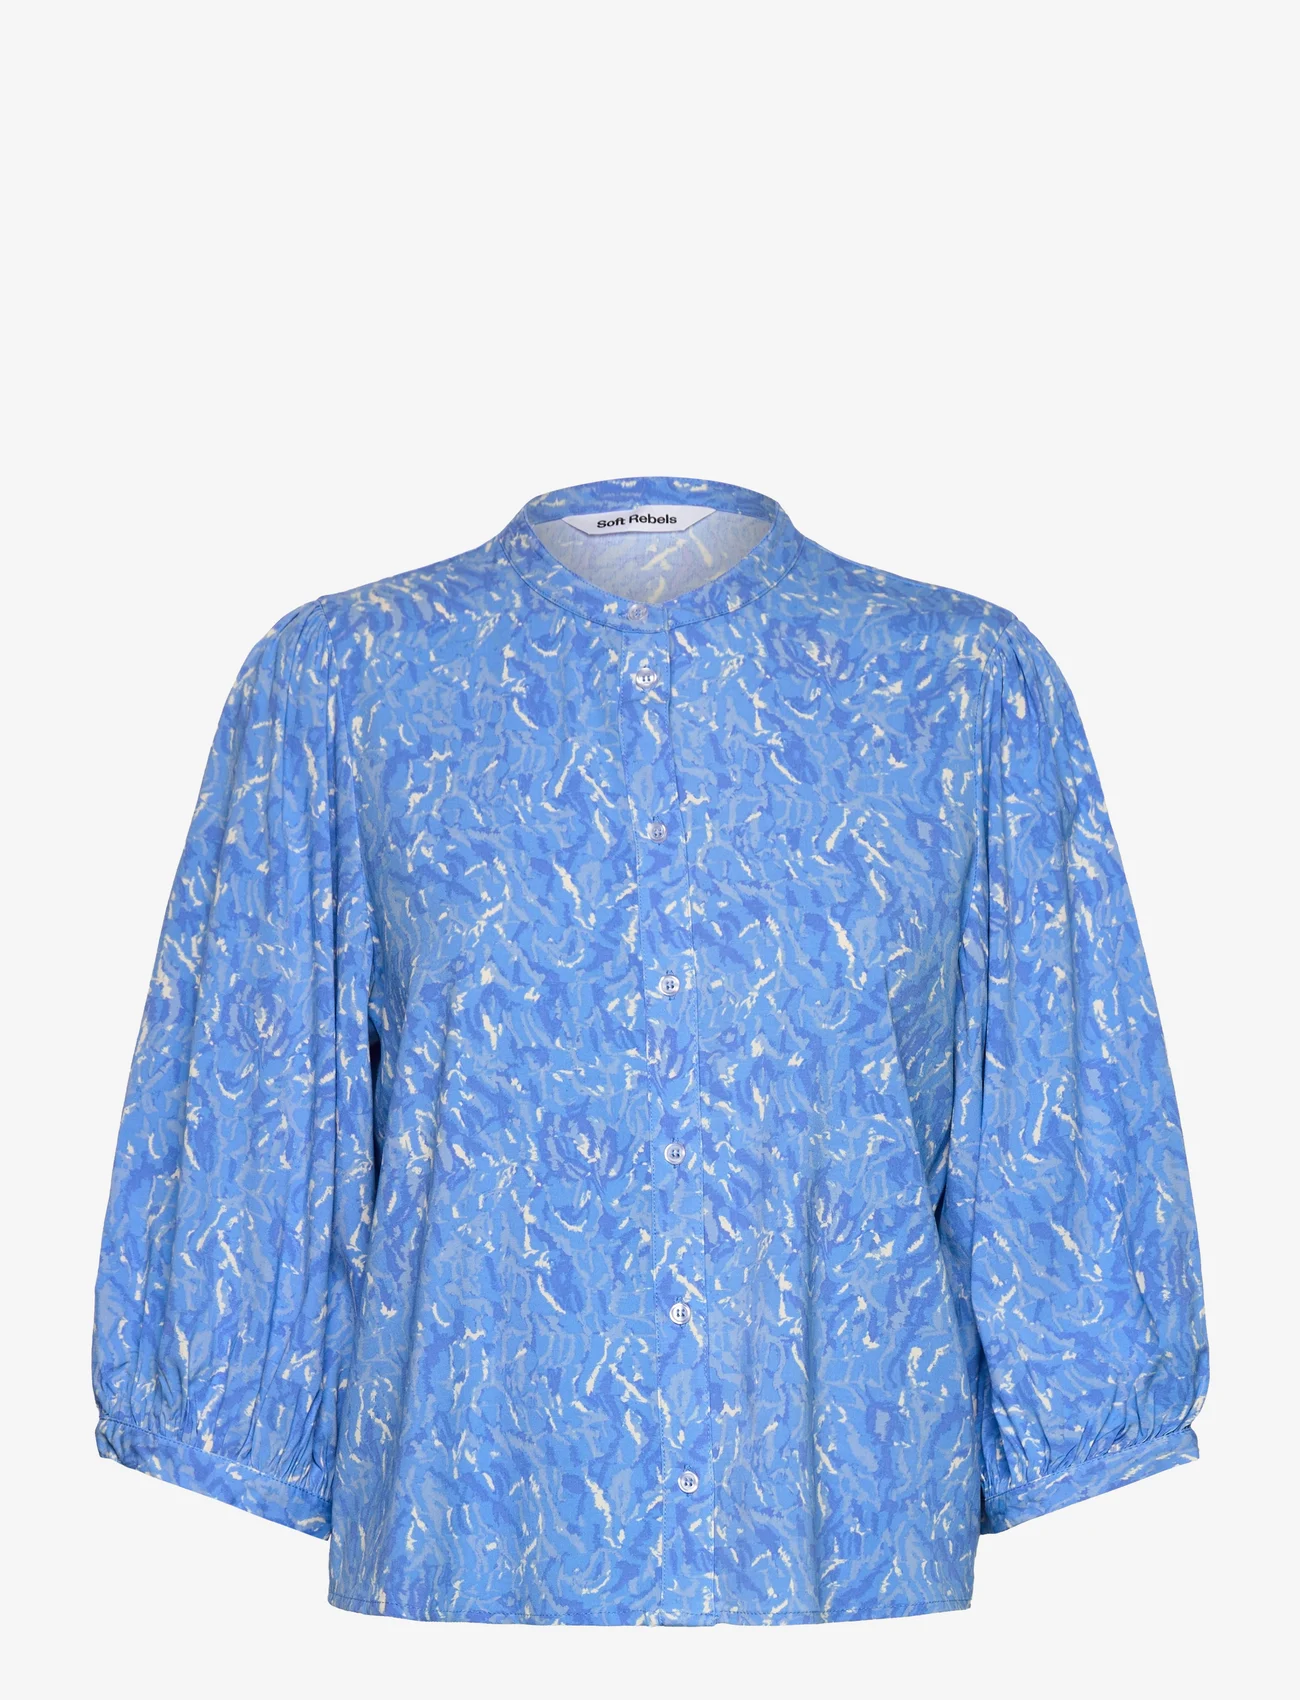 Soft Rebels - SRBriella Elma Shirt - langærmede bluser - graphic animal azure blue print - 0